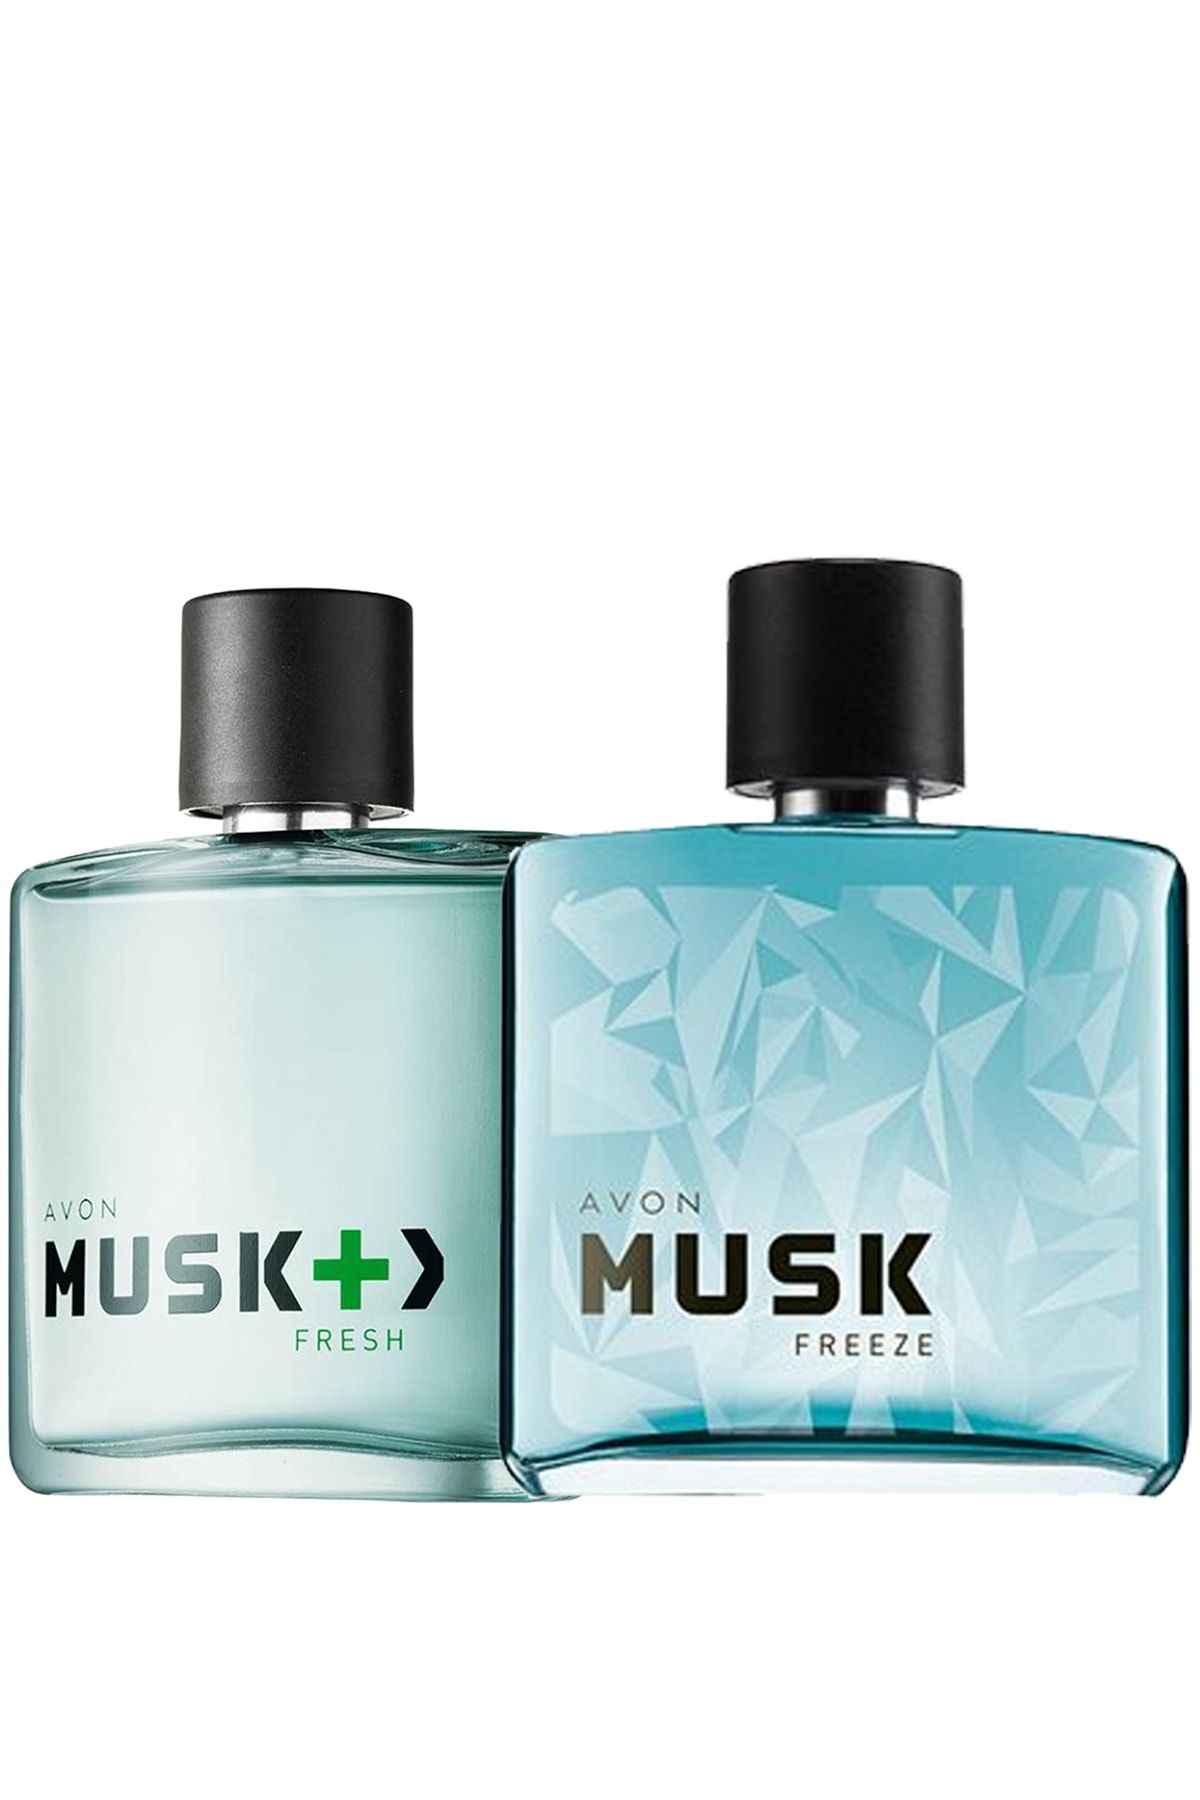 Avon Musk Fresh Ve Musk Freeze Erkek Parfüm Paketi